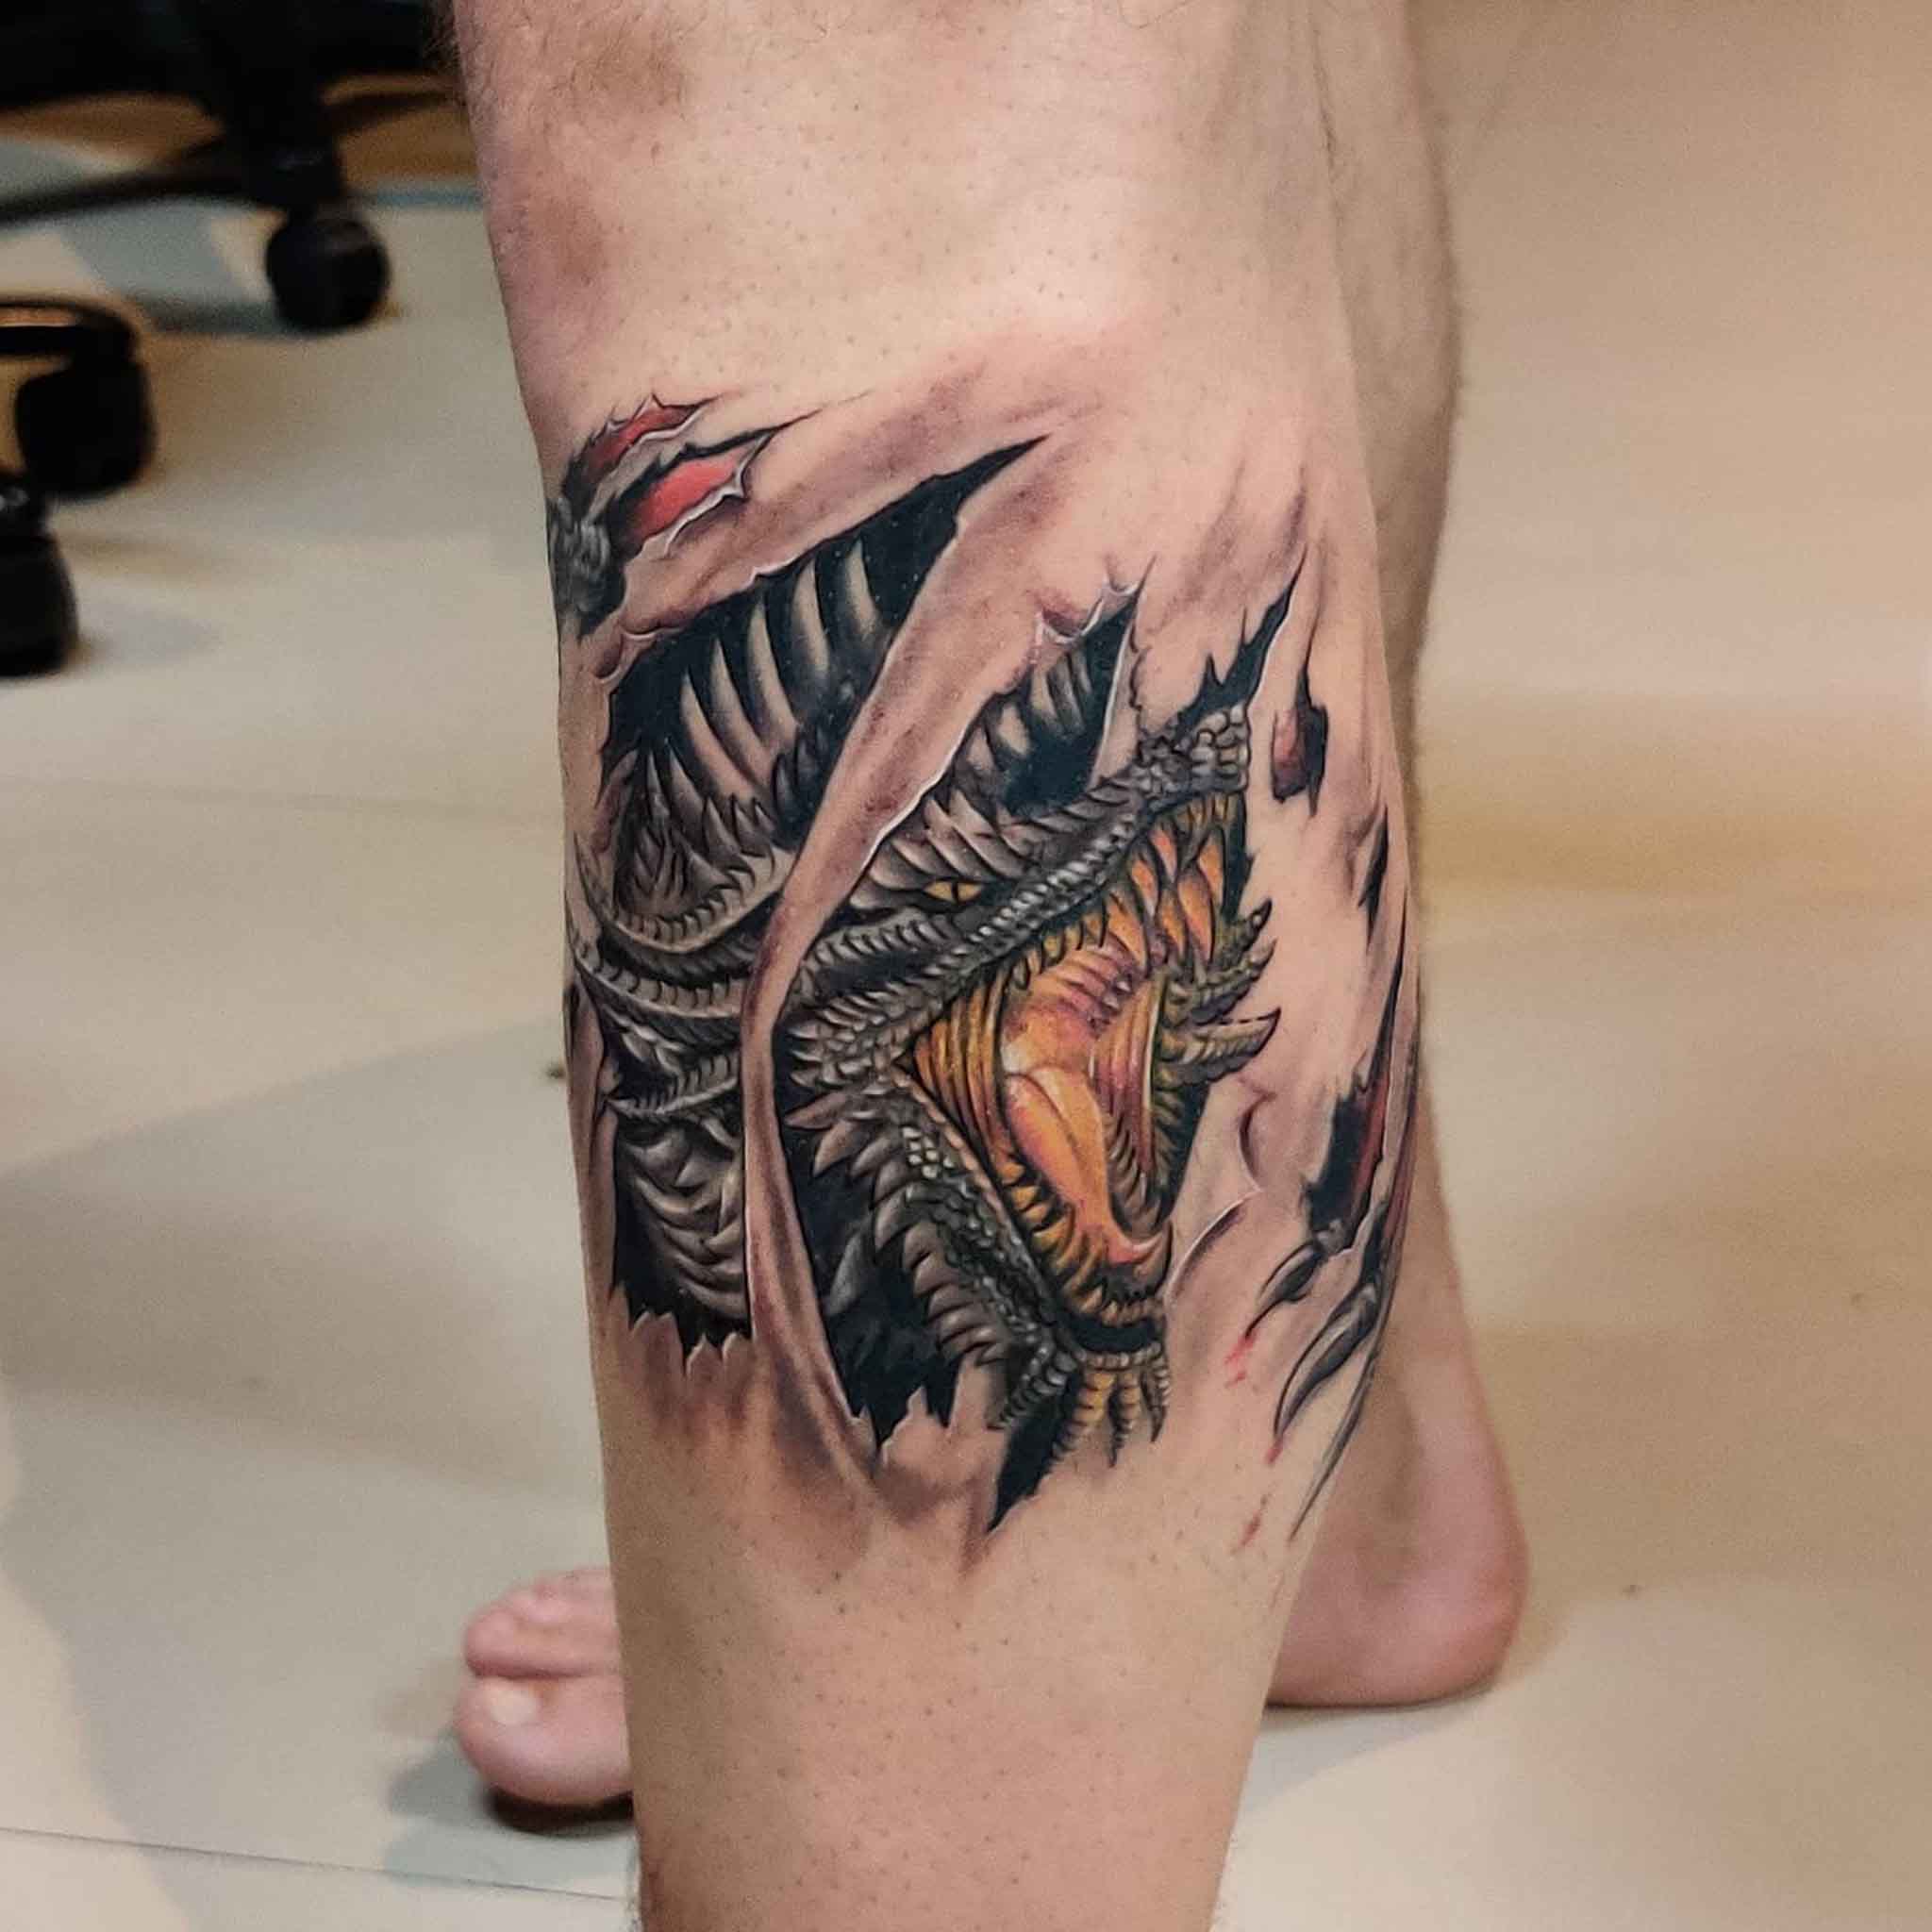 Tattoo uploaded by PANAYIOTIS ANASTASAKOS • eagle tattoo • Tattoodo